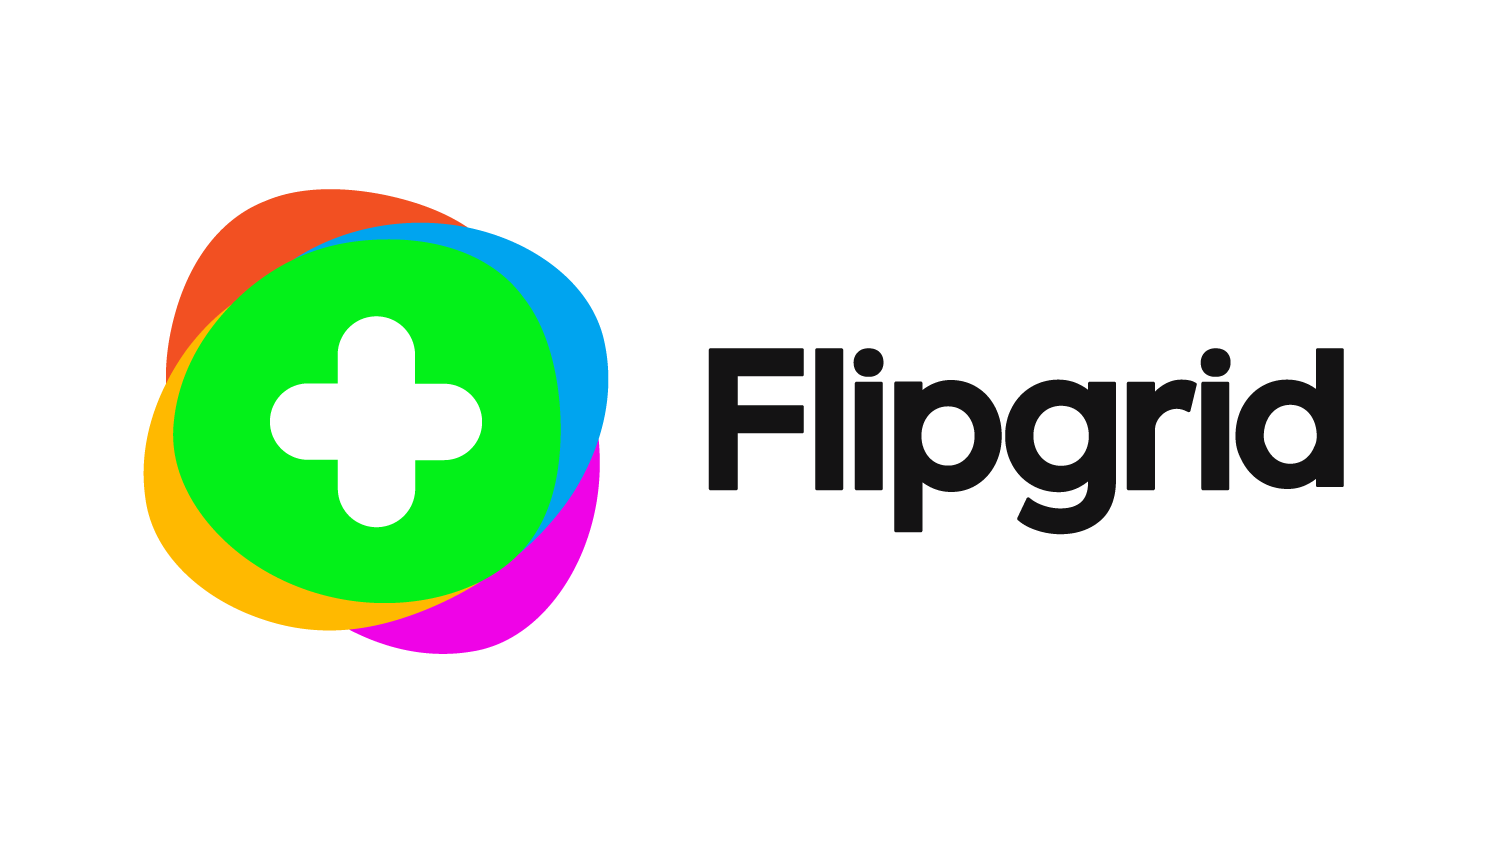 Flipgrid logo click to navigate to flipgrid sign up page